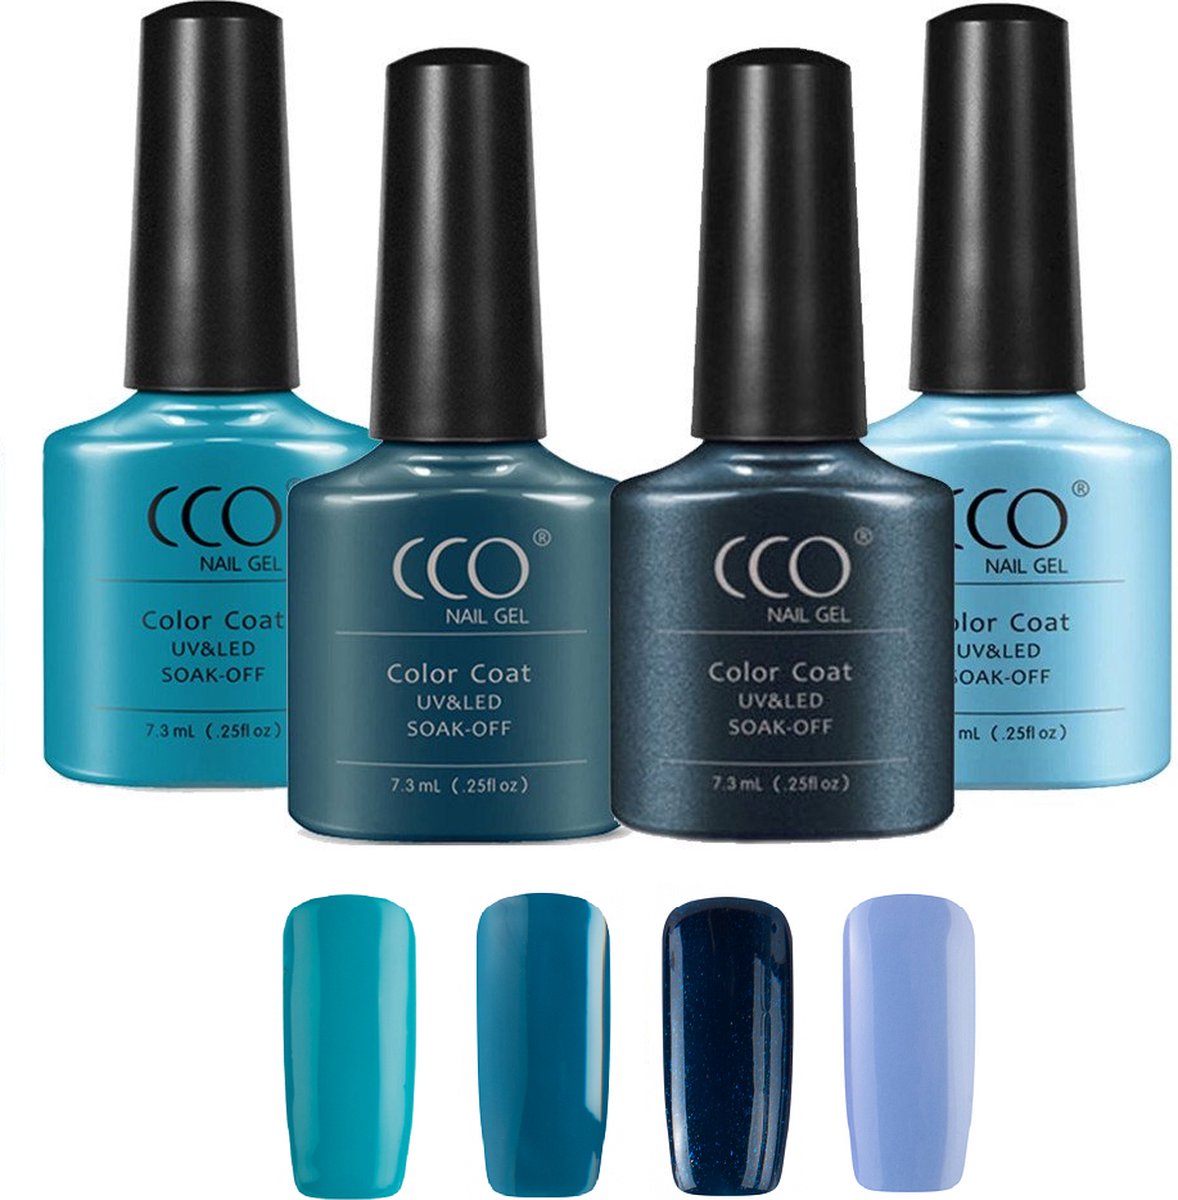 CCO Gellak Blue Collectie - Blauw - Dekkende kleur - 7.3ml - Vegan